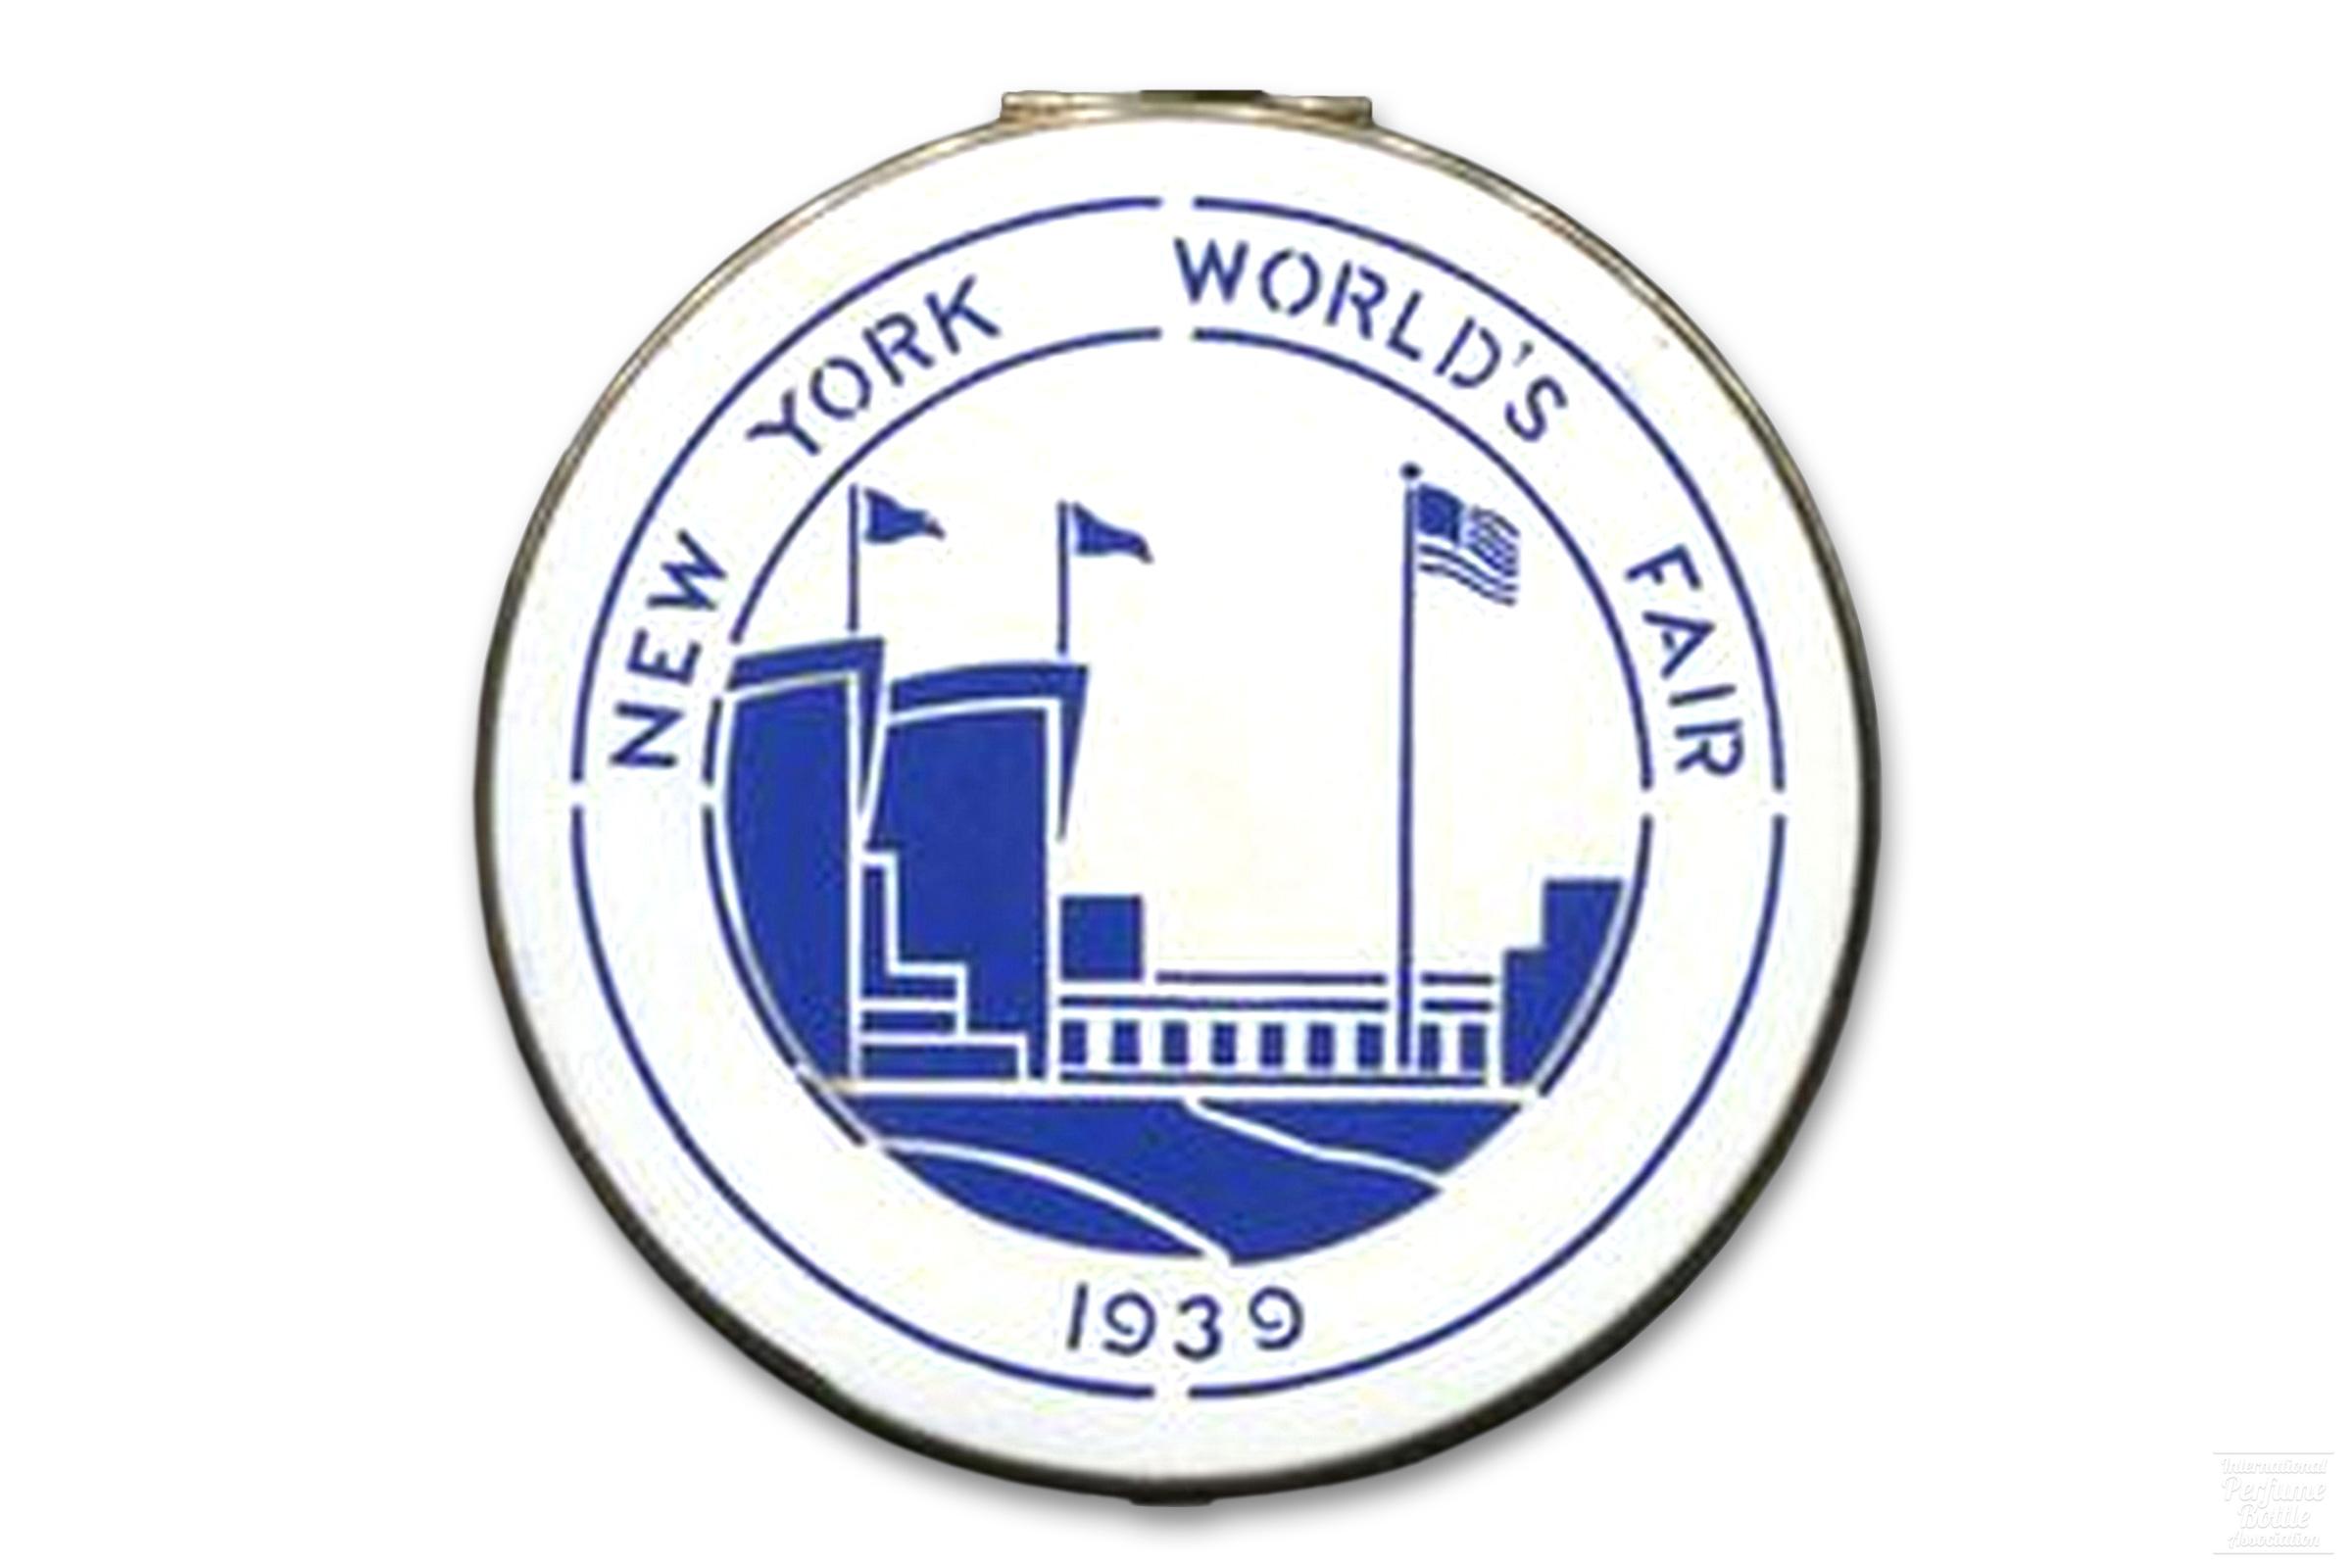 New York World's Fair 1939 Compacts